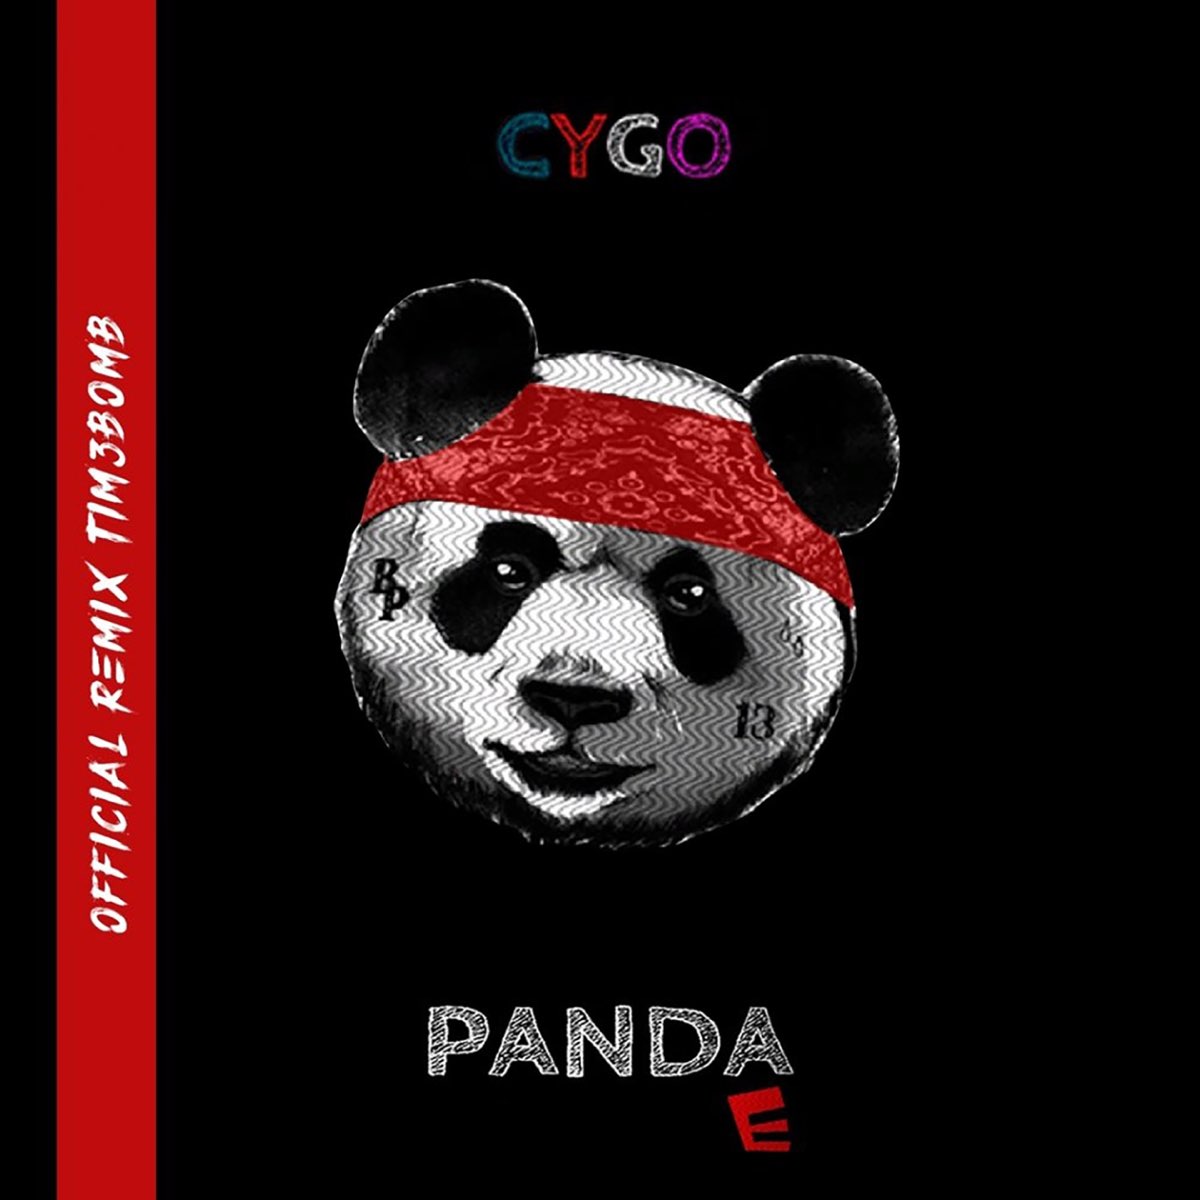 CYGO Panda. Panda CYGO обложка. Панда е. Сайго – Панда е. Песня панда мы бежим